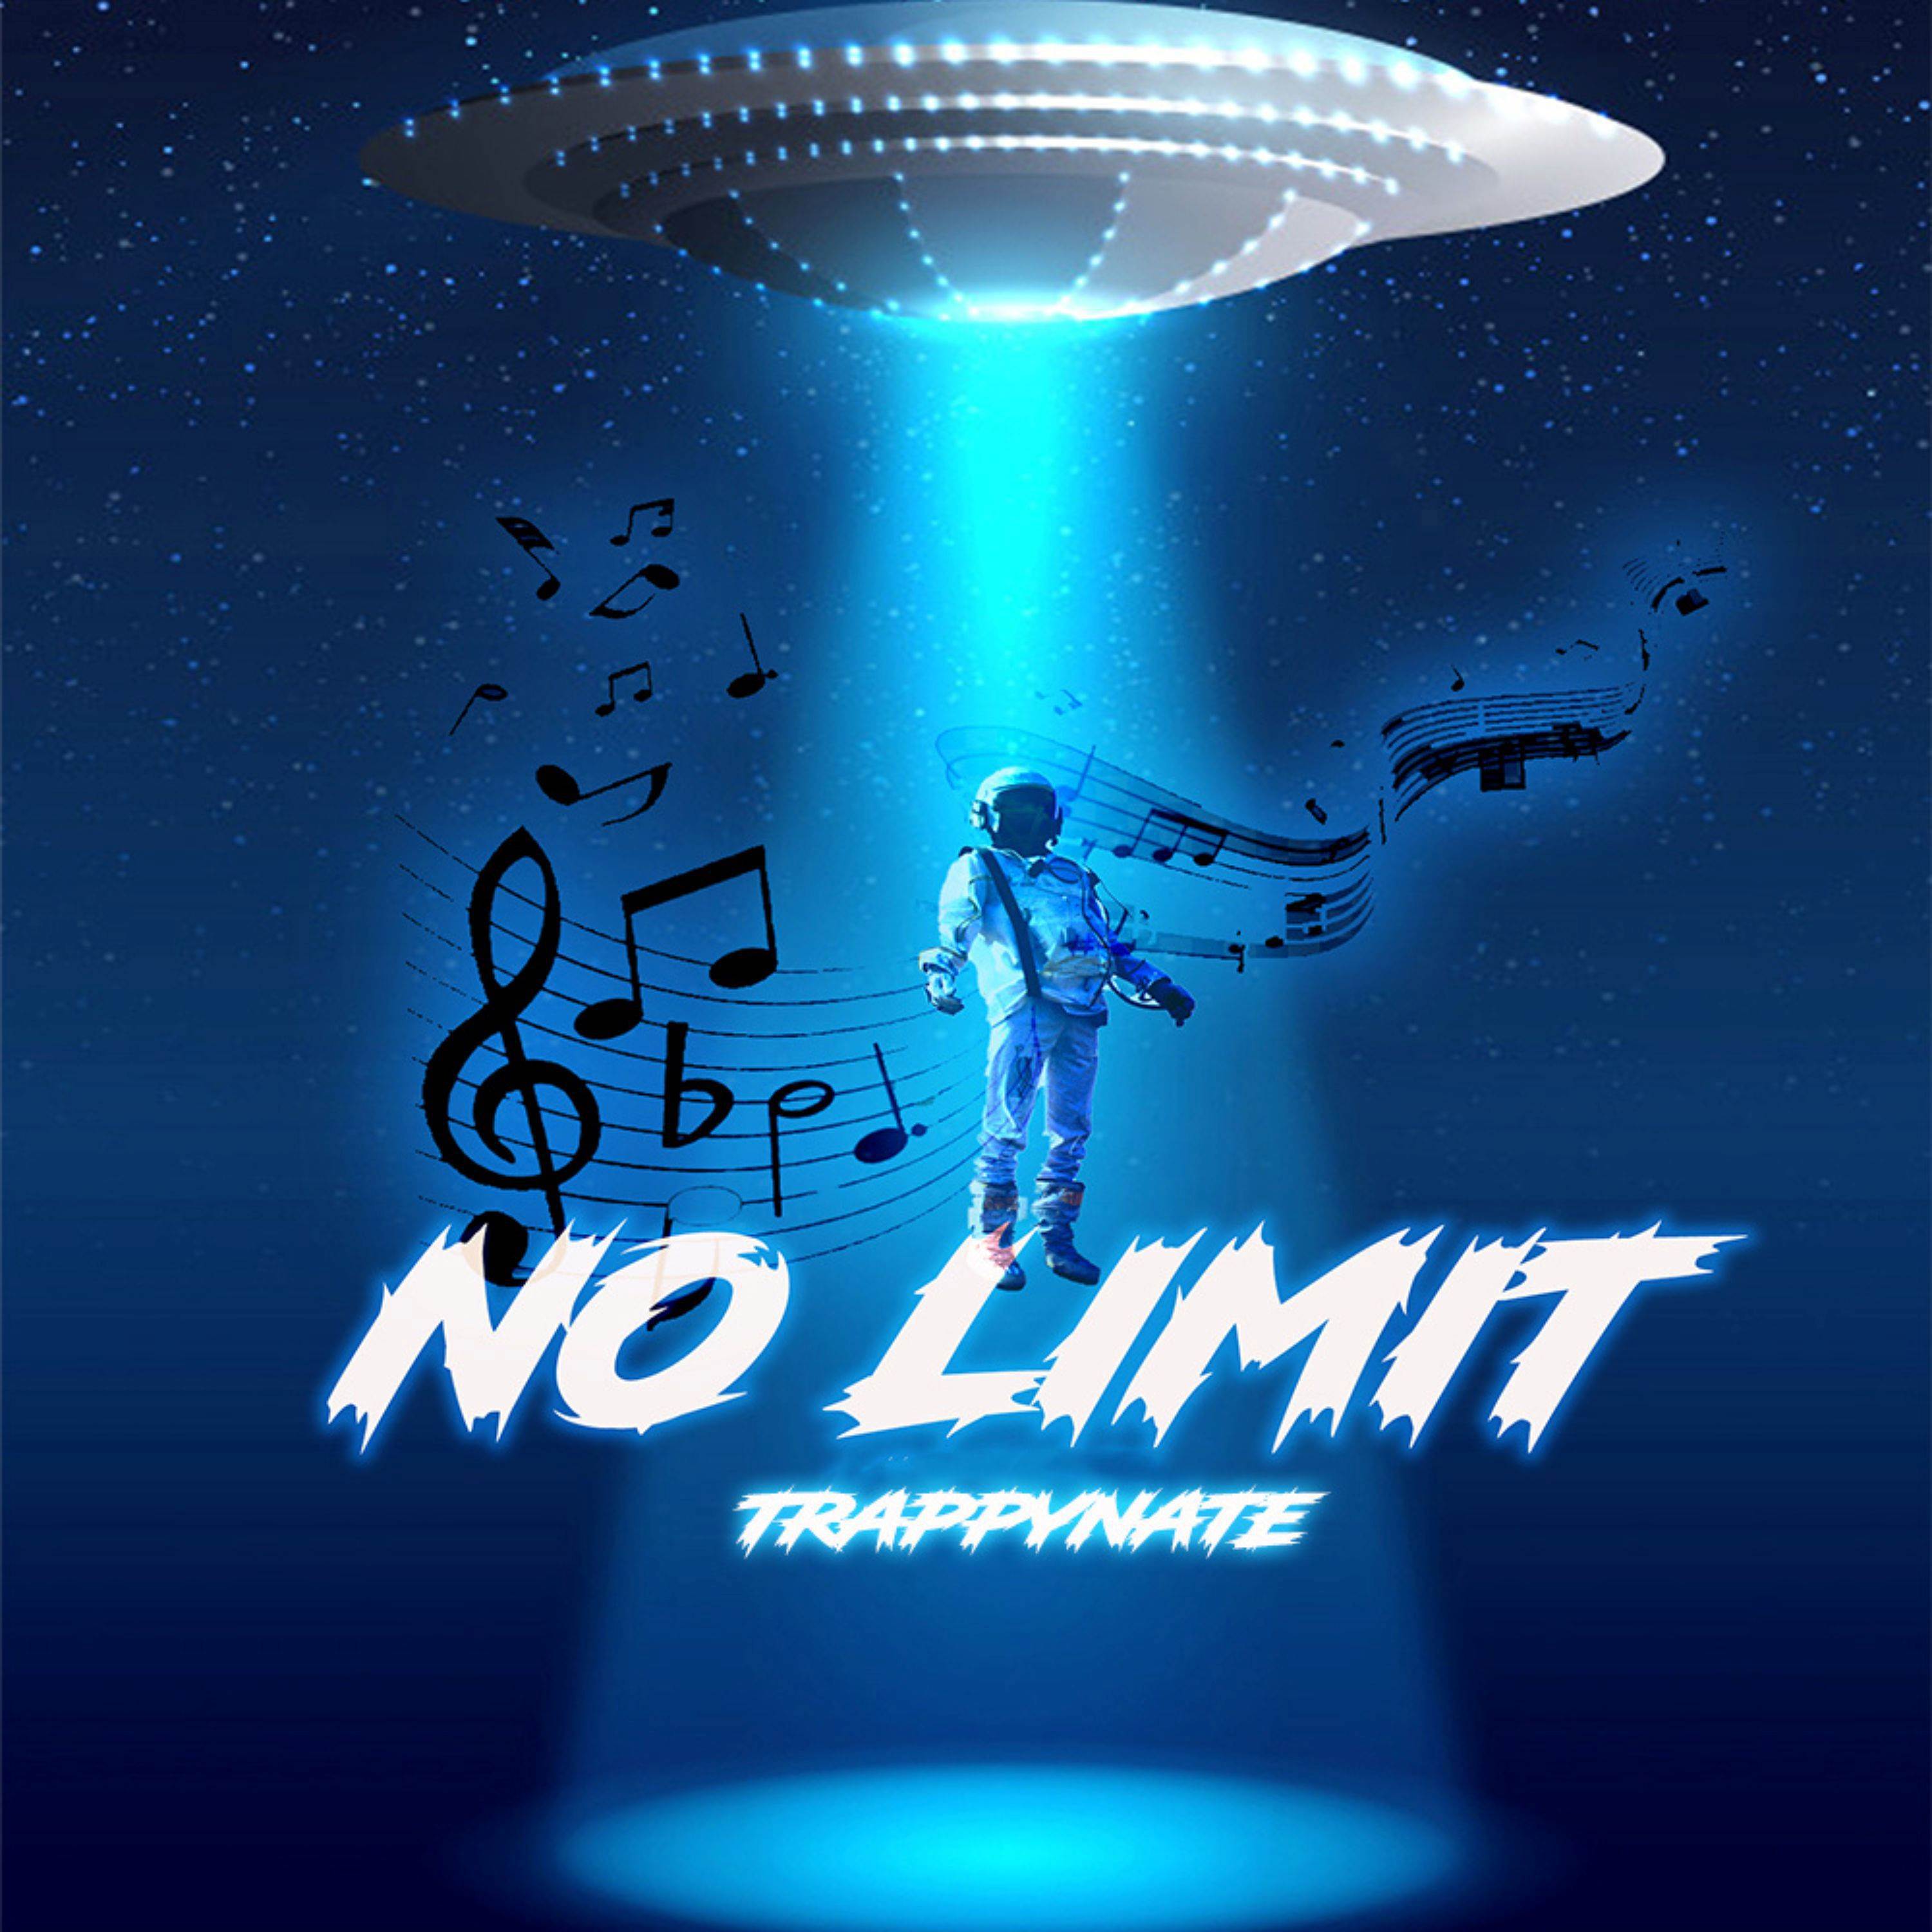 Trappynate - No Limits